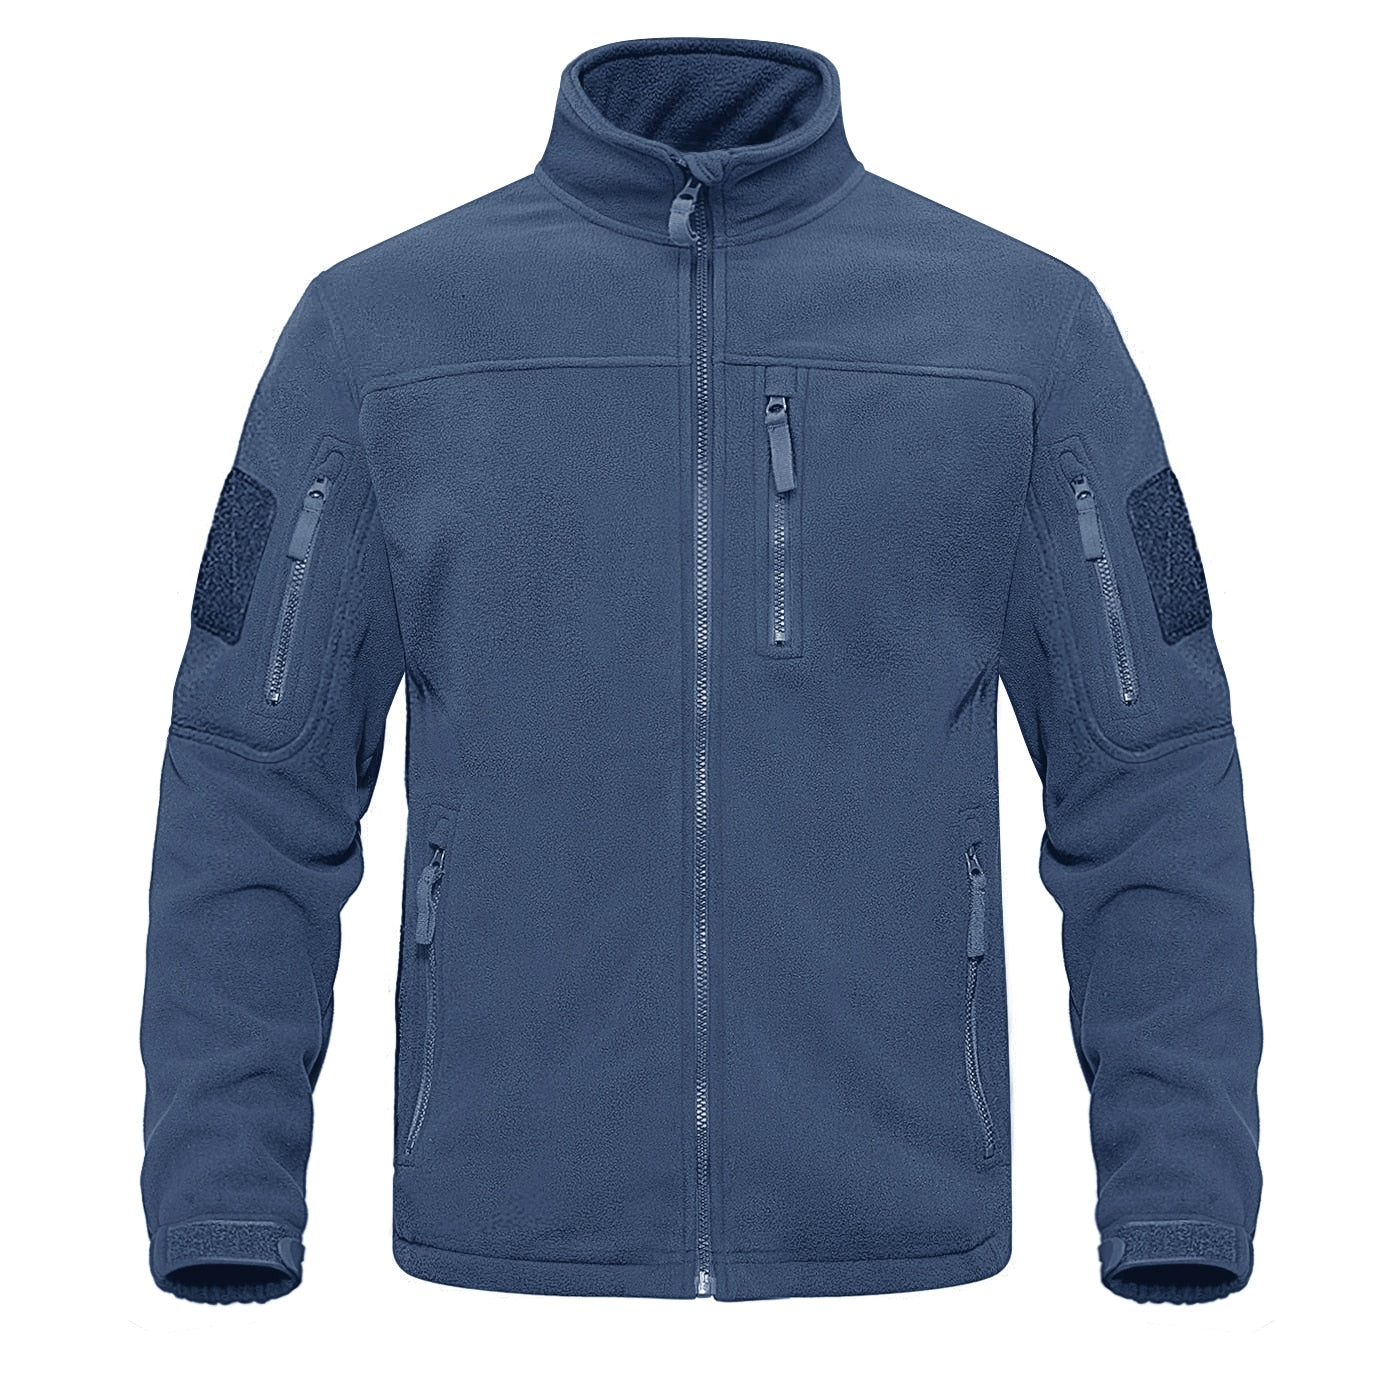 Men's Tactical Army Fleece Military Jacket blue